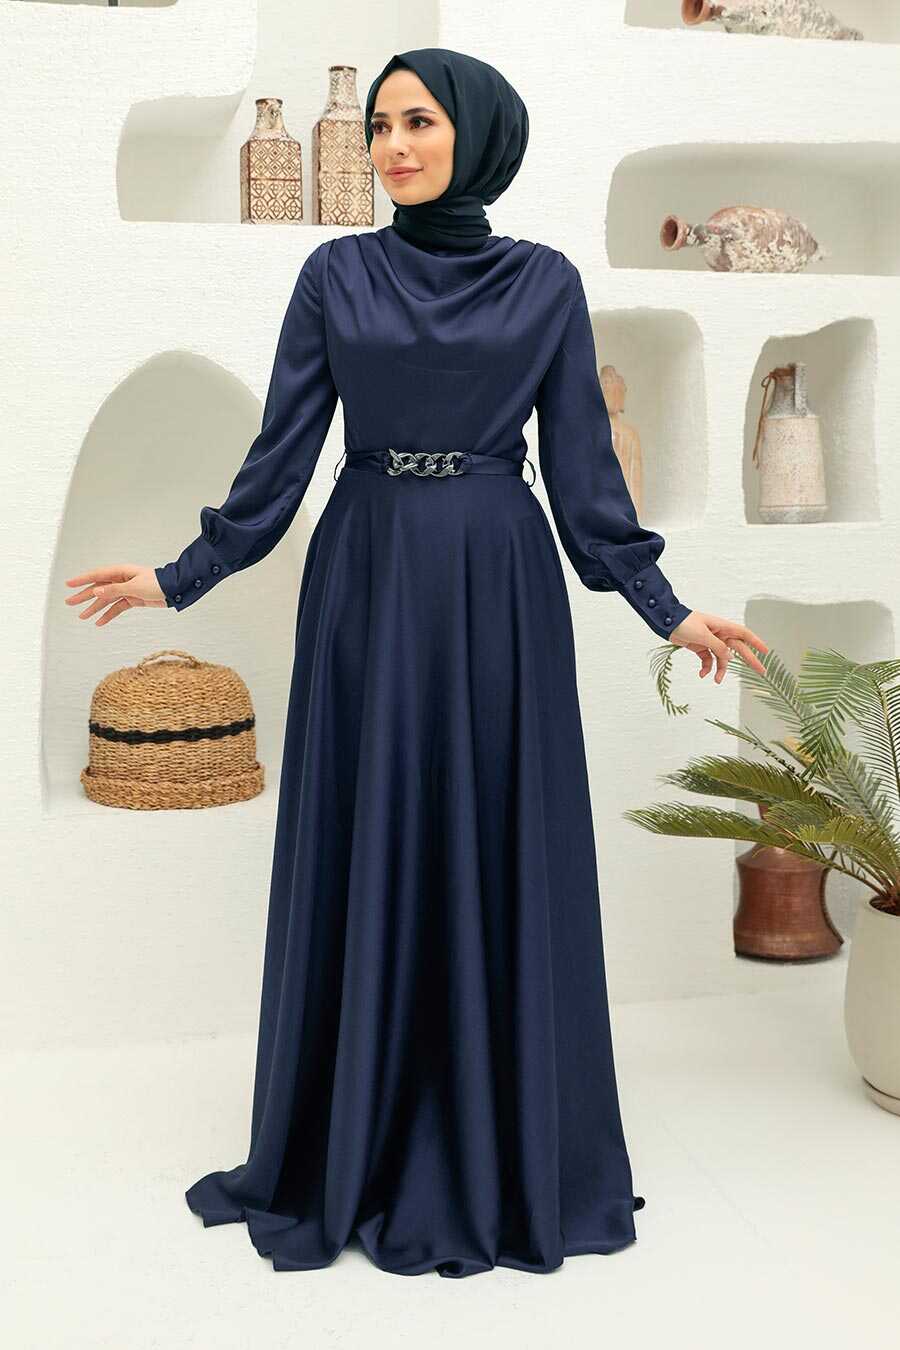 Neva Style - Elegant Navy Blue Muslim Engagement Dress 3460L